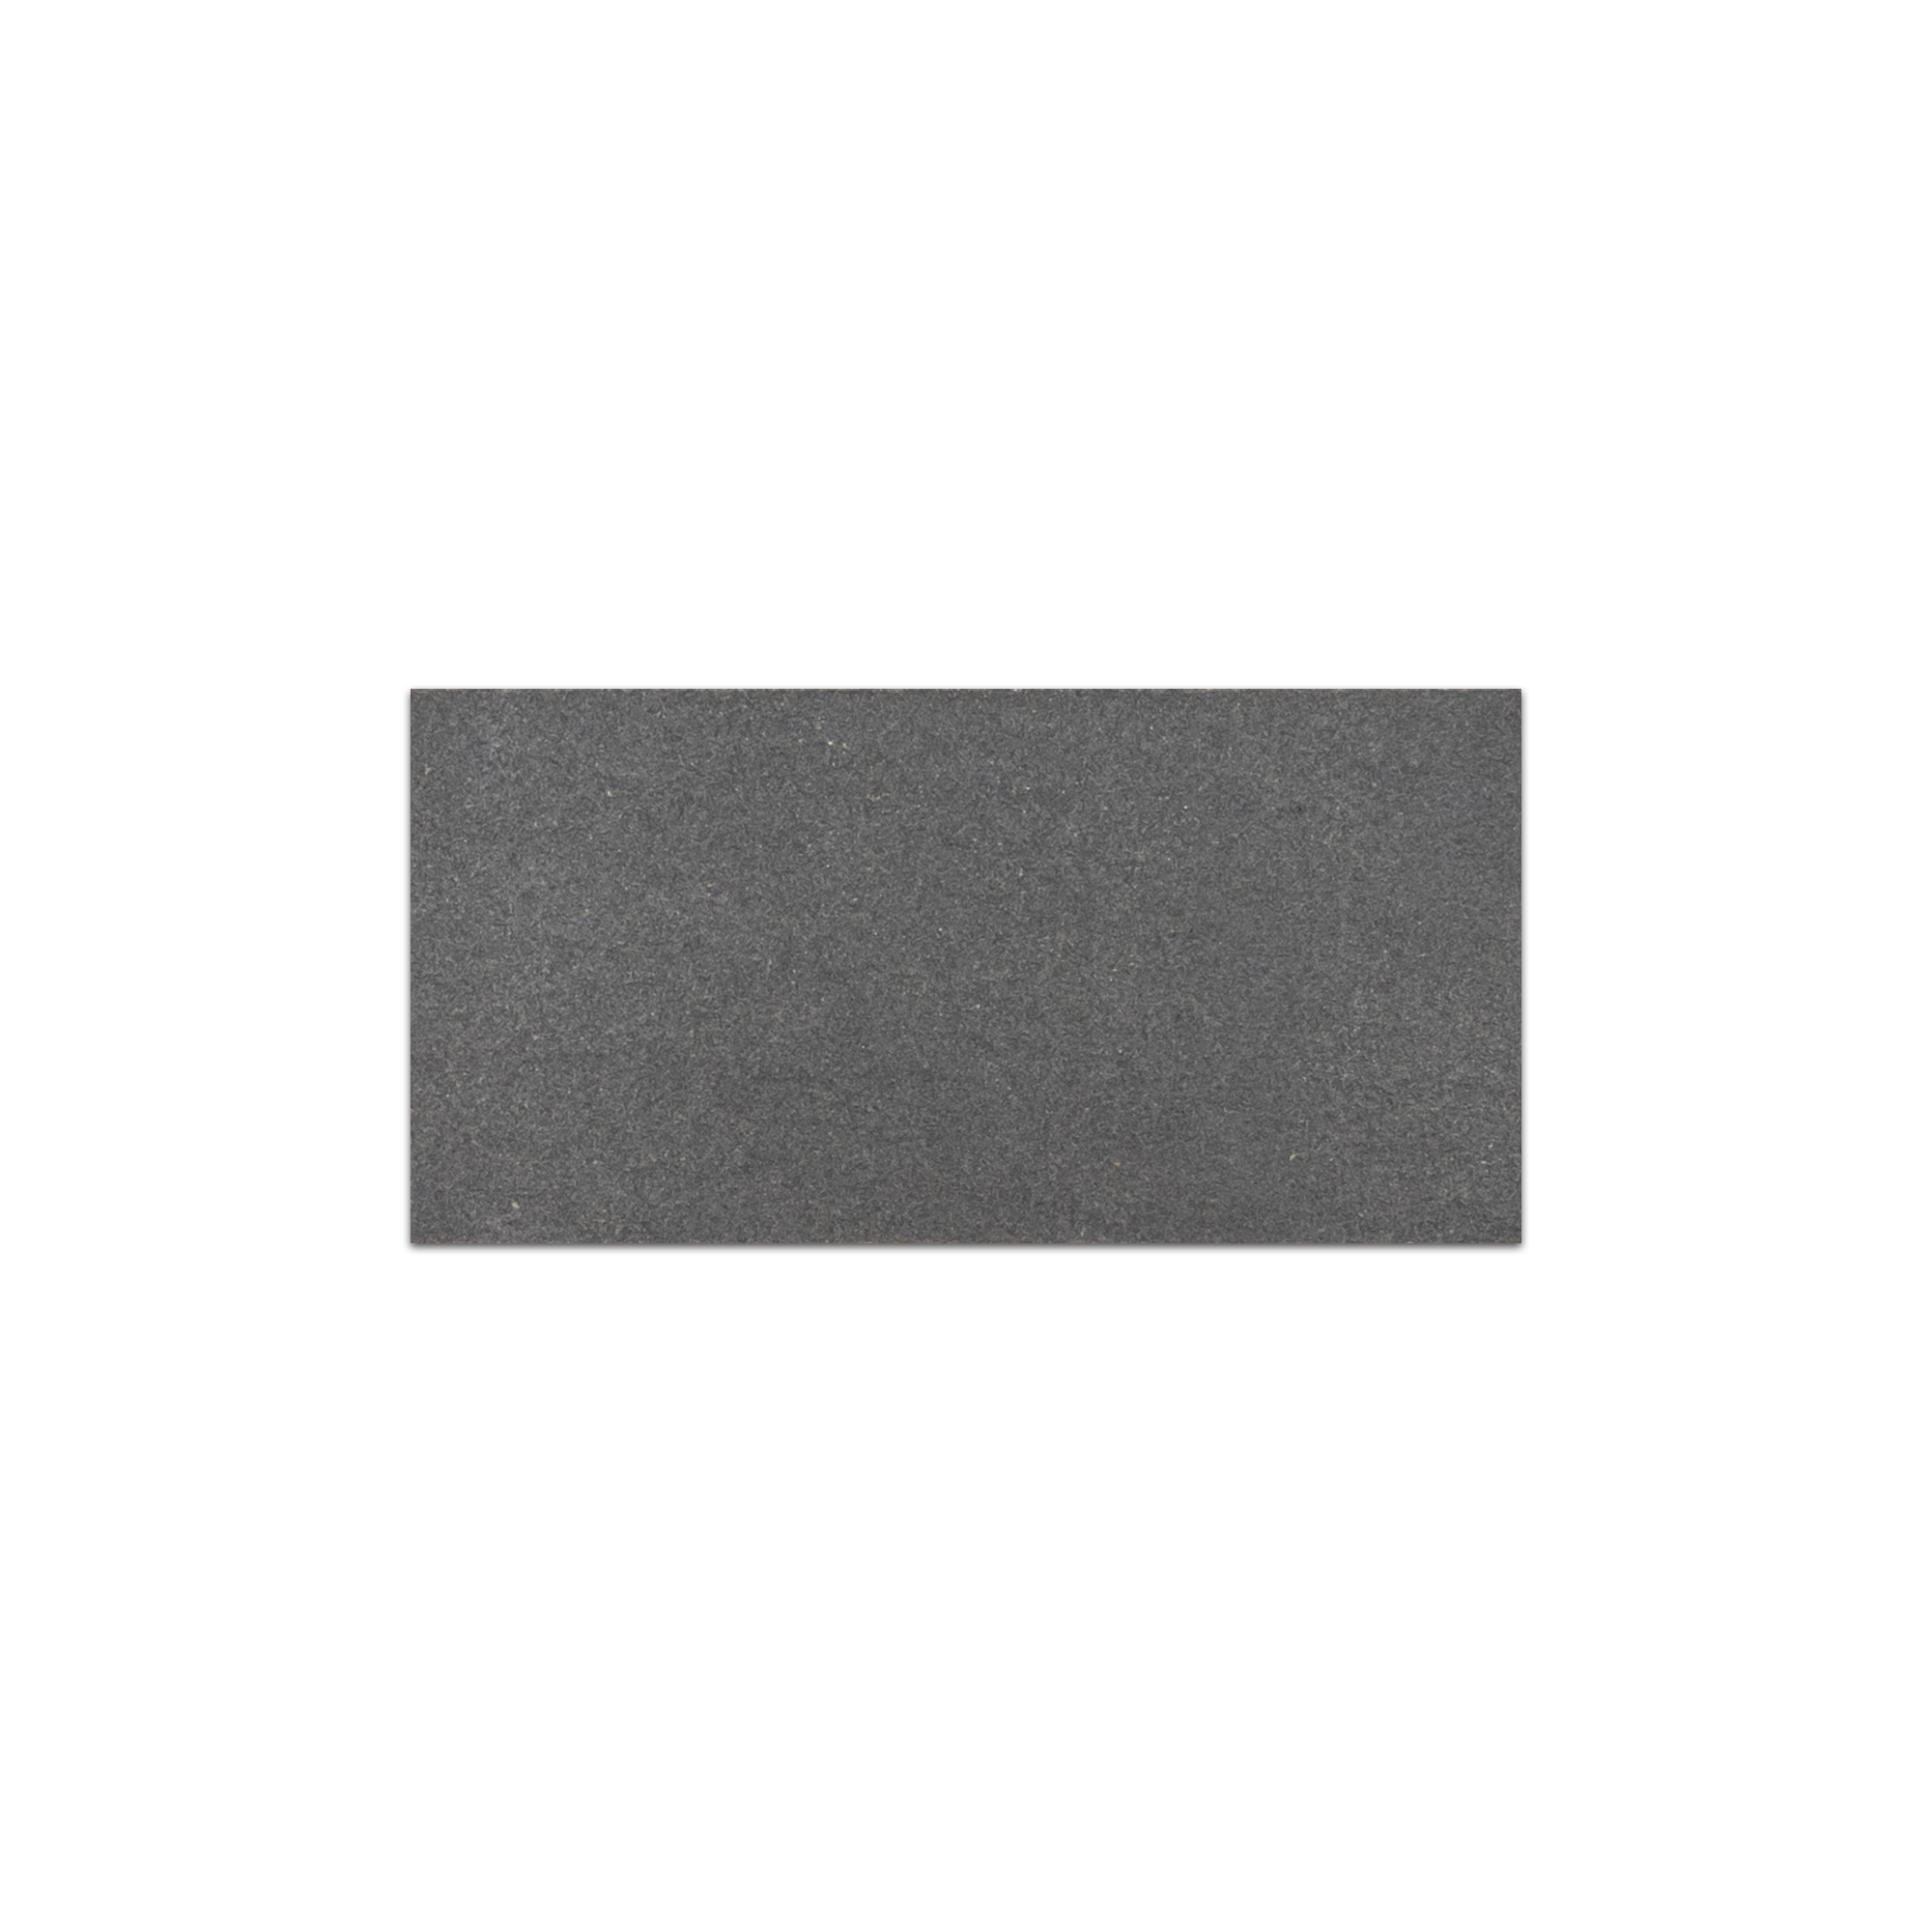 Elon grey basalt rectangle field tile 3x6x0.375 honed VT0306H - Surface Group Online Tile Store